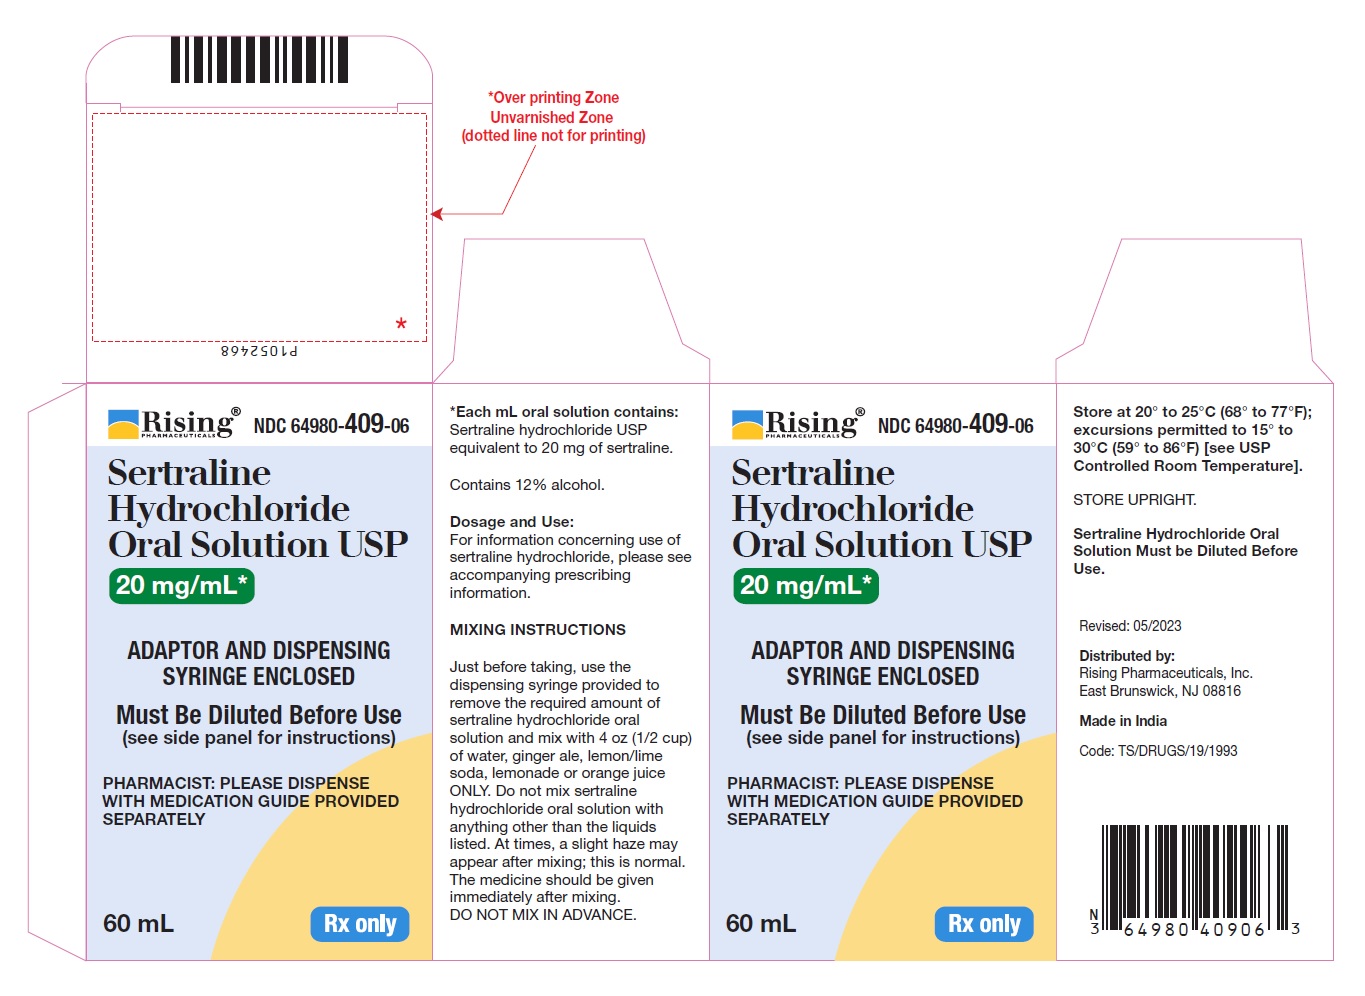 PACKAGE LABEL-PRINCIPAL DISPLAY PANEL - 20 mg/mL Carton Label